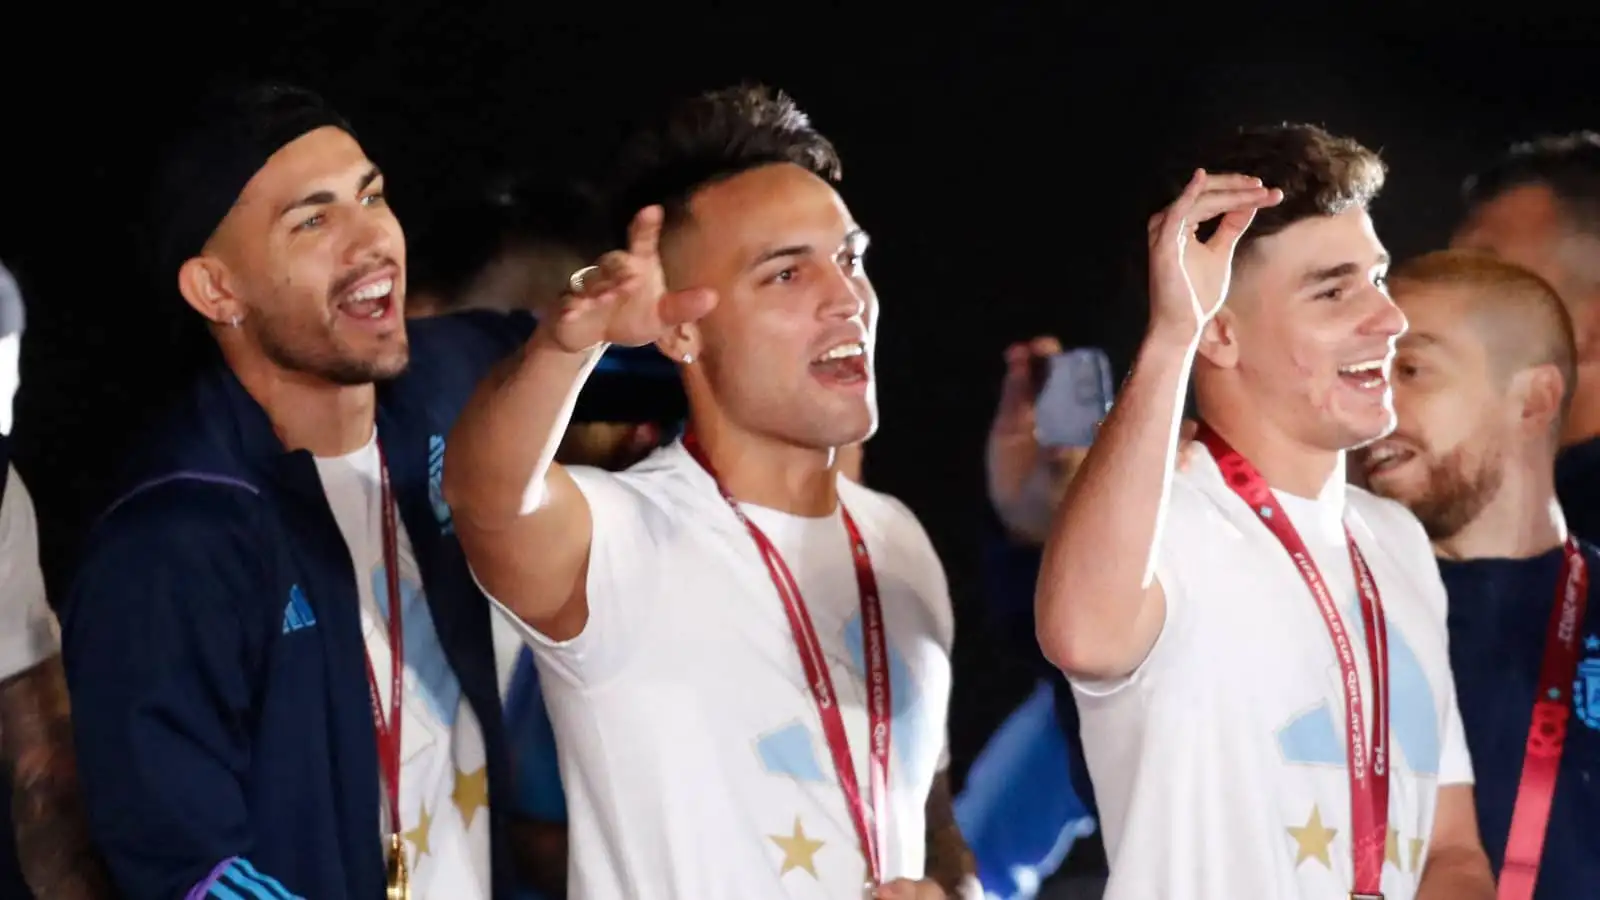 Argentina world cup winners Lautaro Martinez and Julian Alvarez